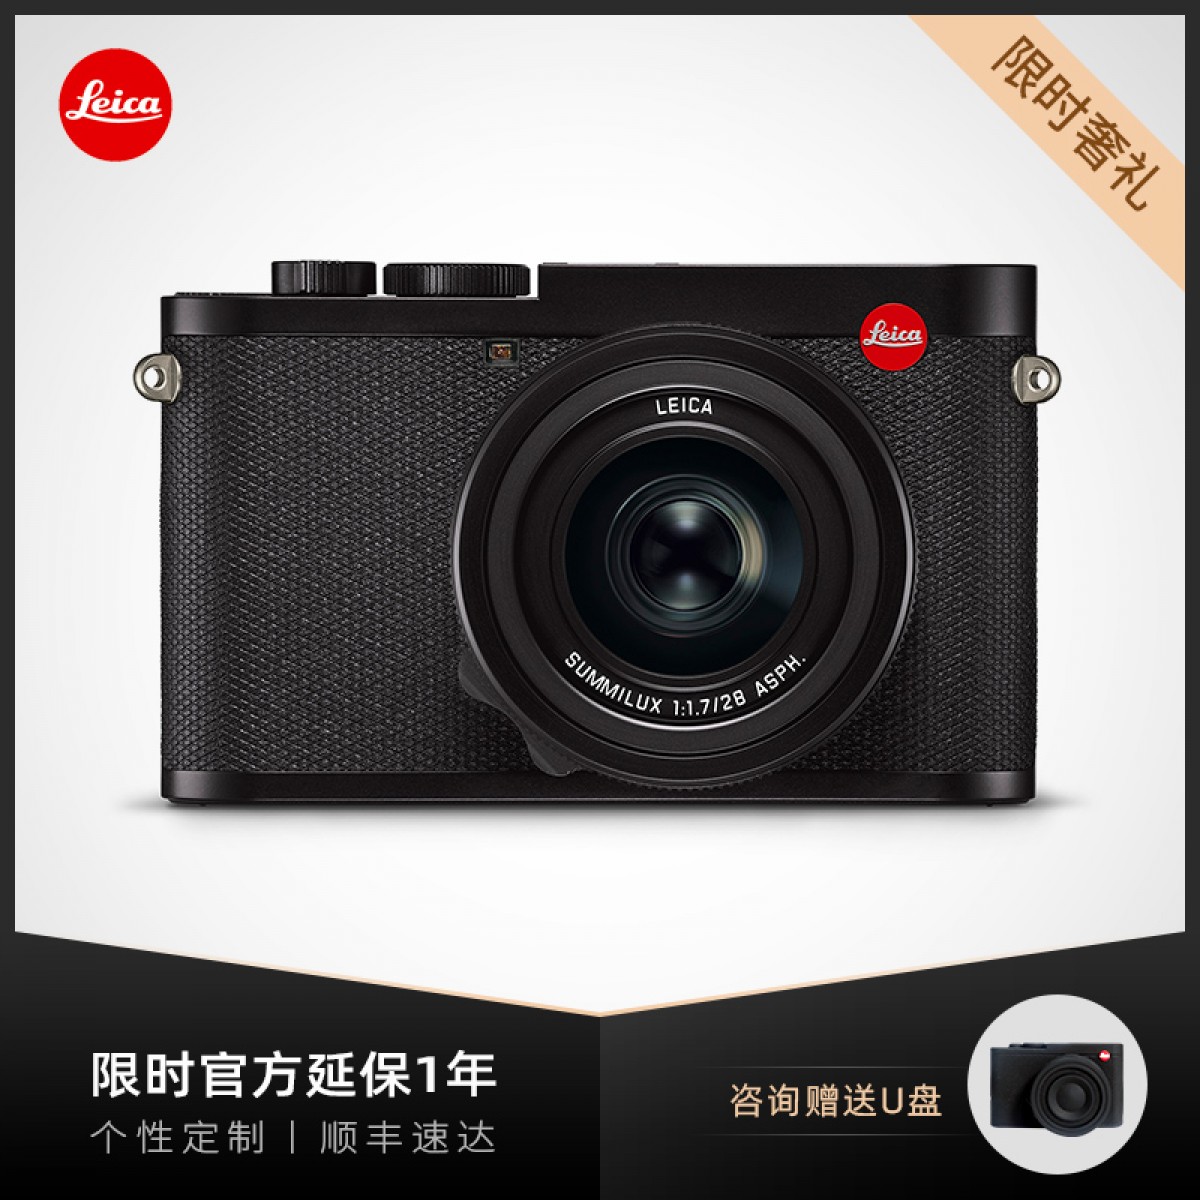 Leica/徕卡 Q2全画幅数码相机 微单相机 4730万像素 4K视频摄影